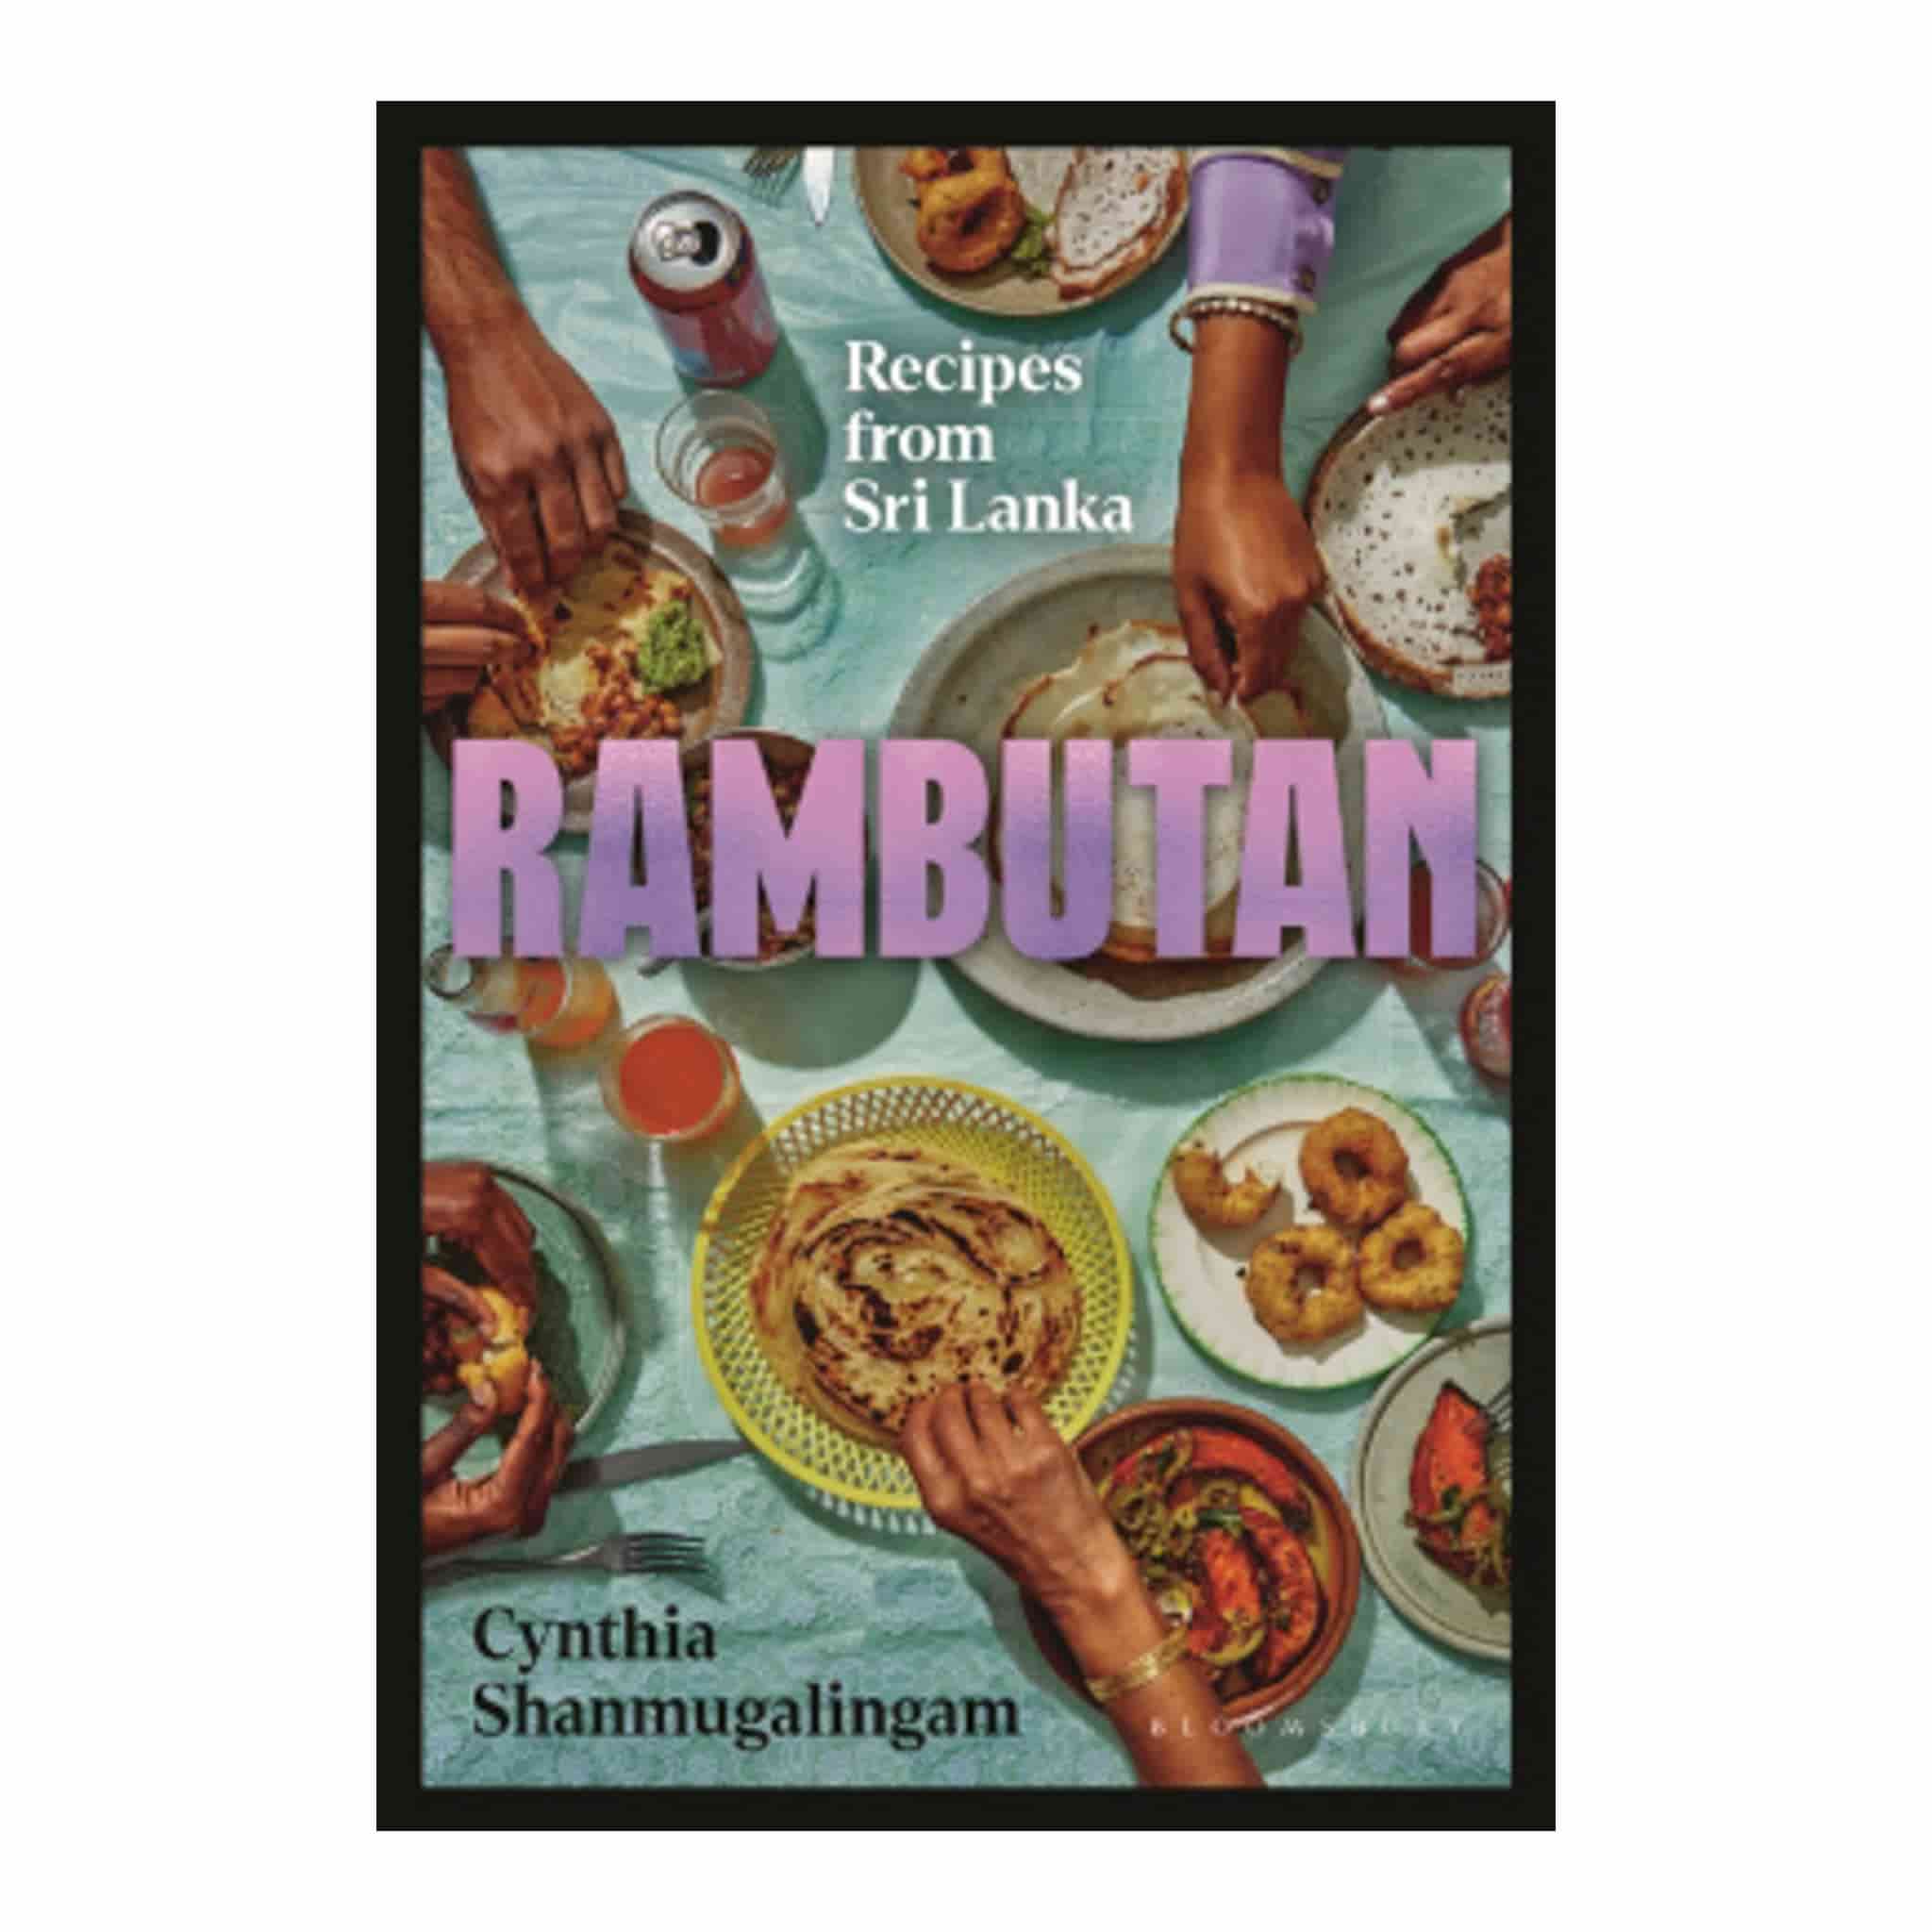 Rambutan, by Cynthia Shanmugalingam